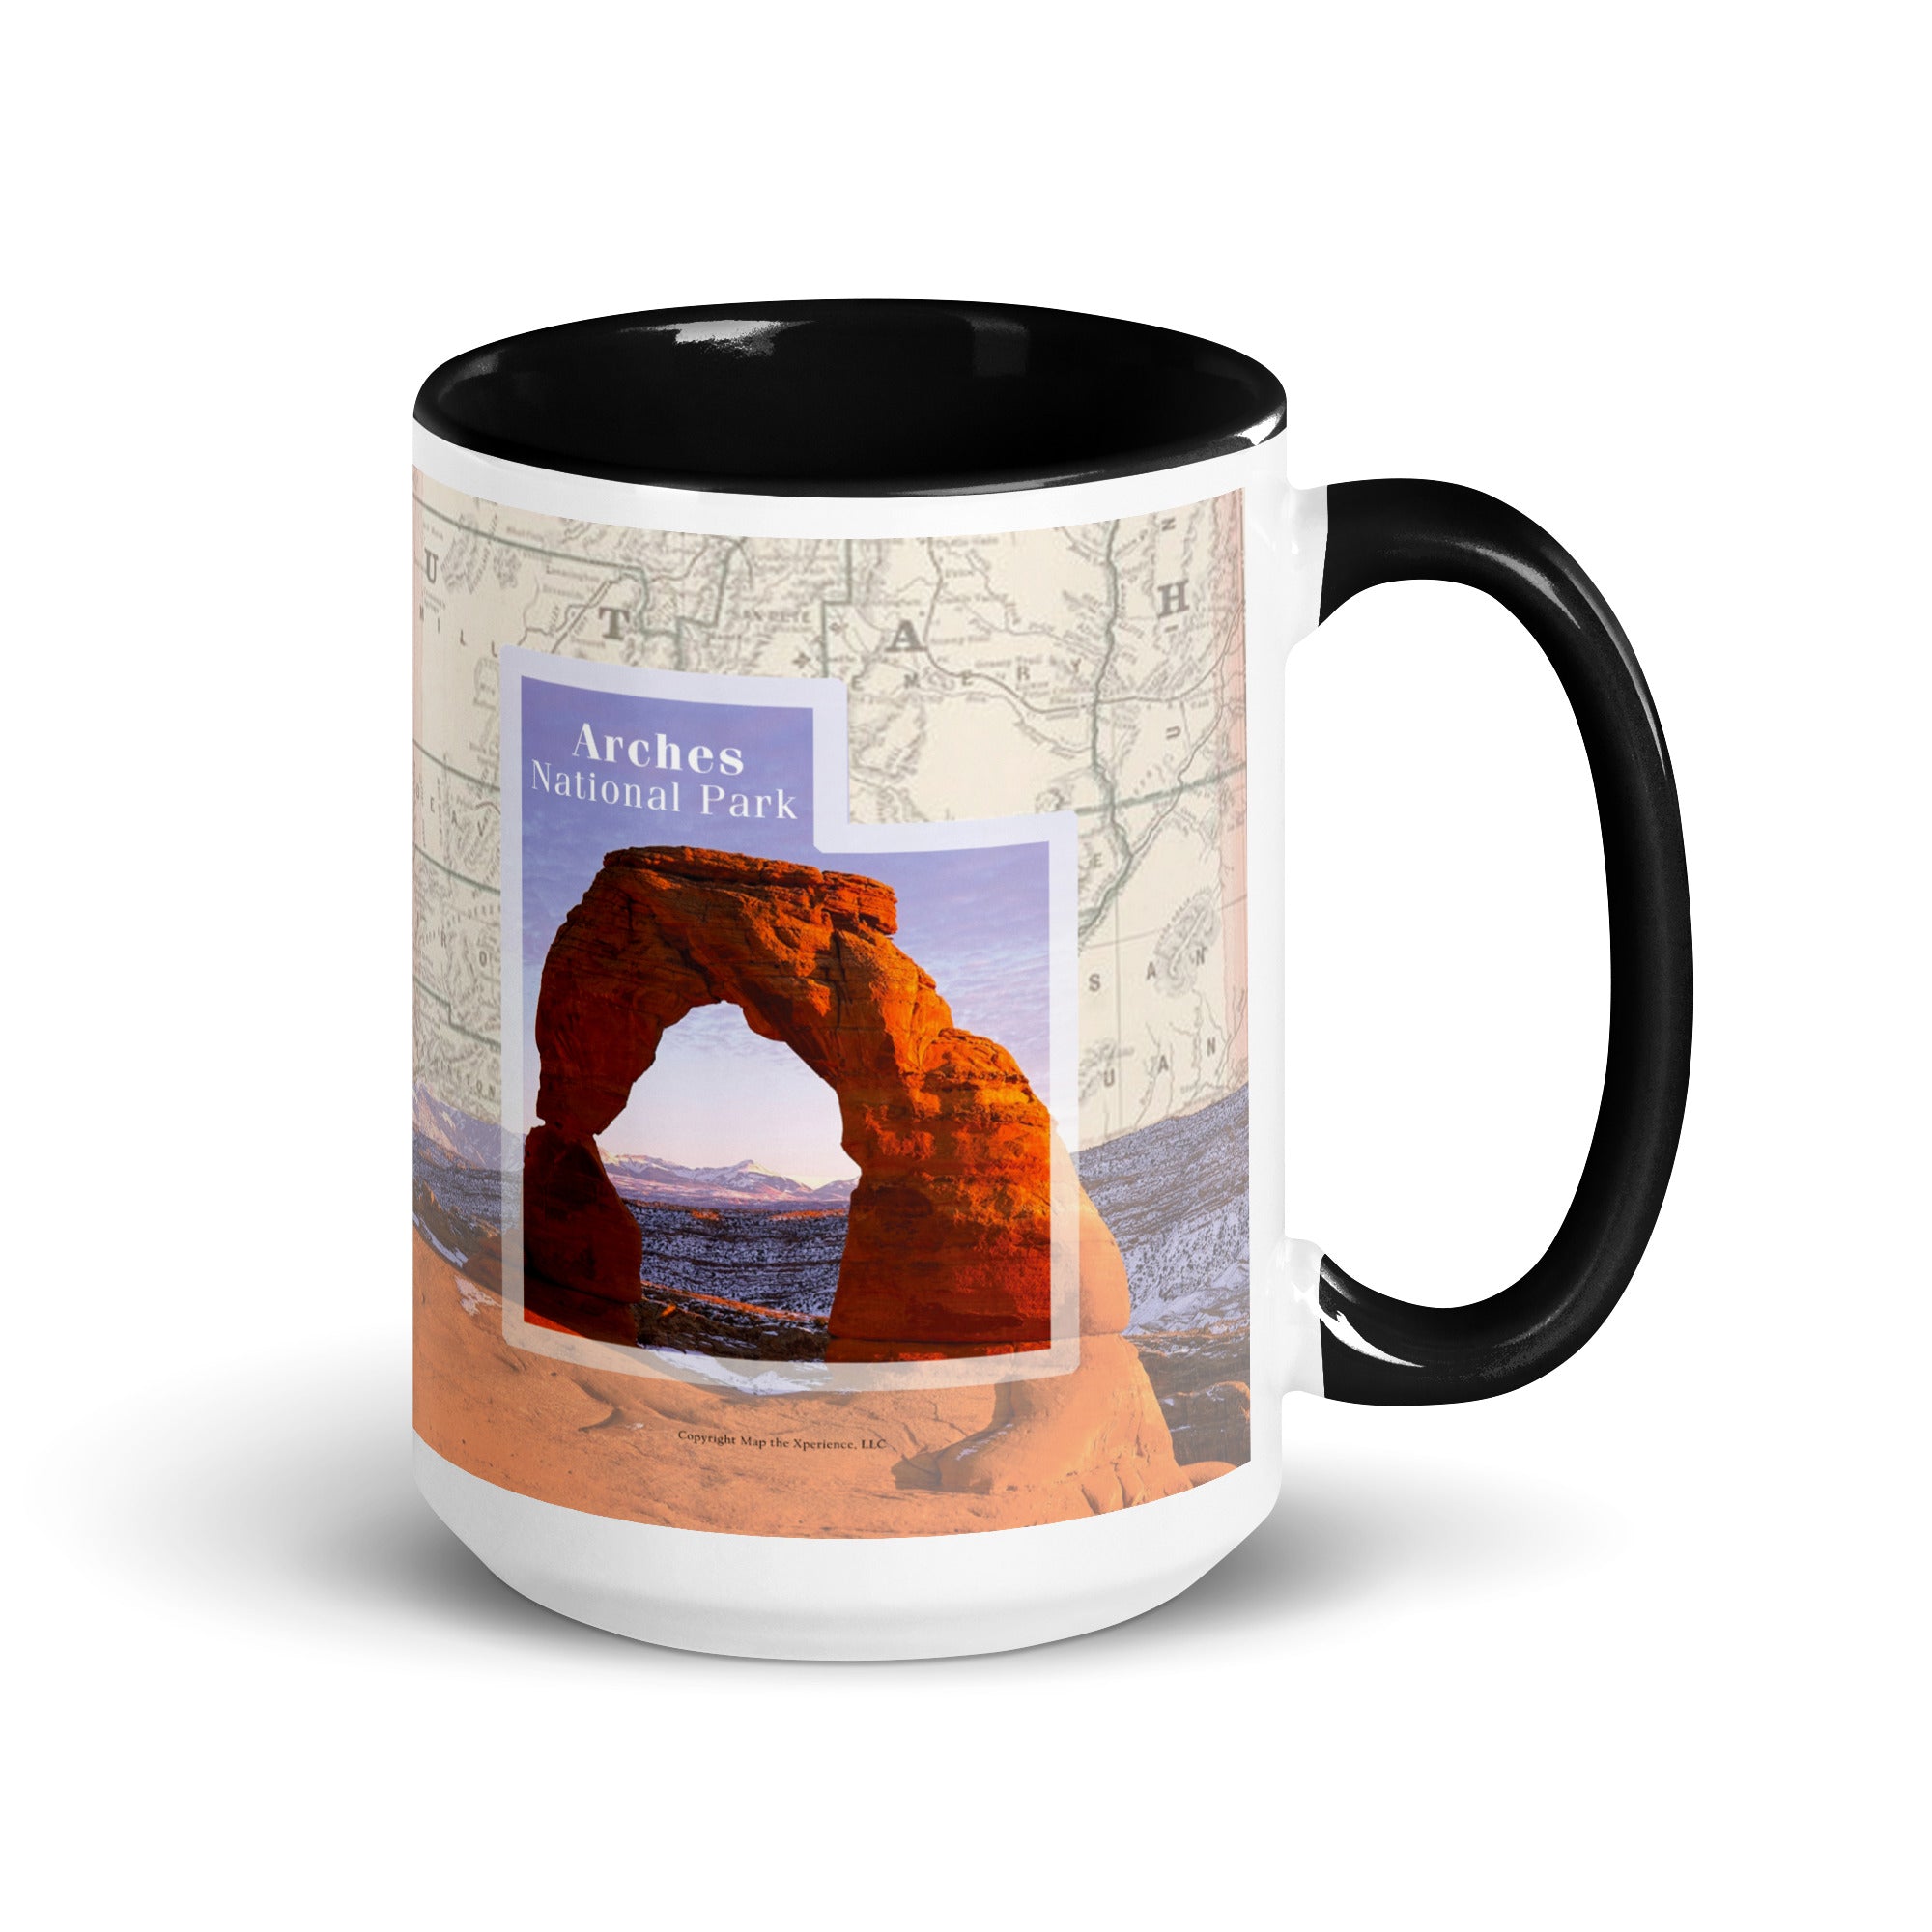 Arches National Park Mug with Black Inside